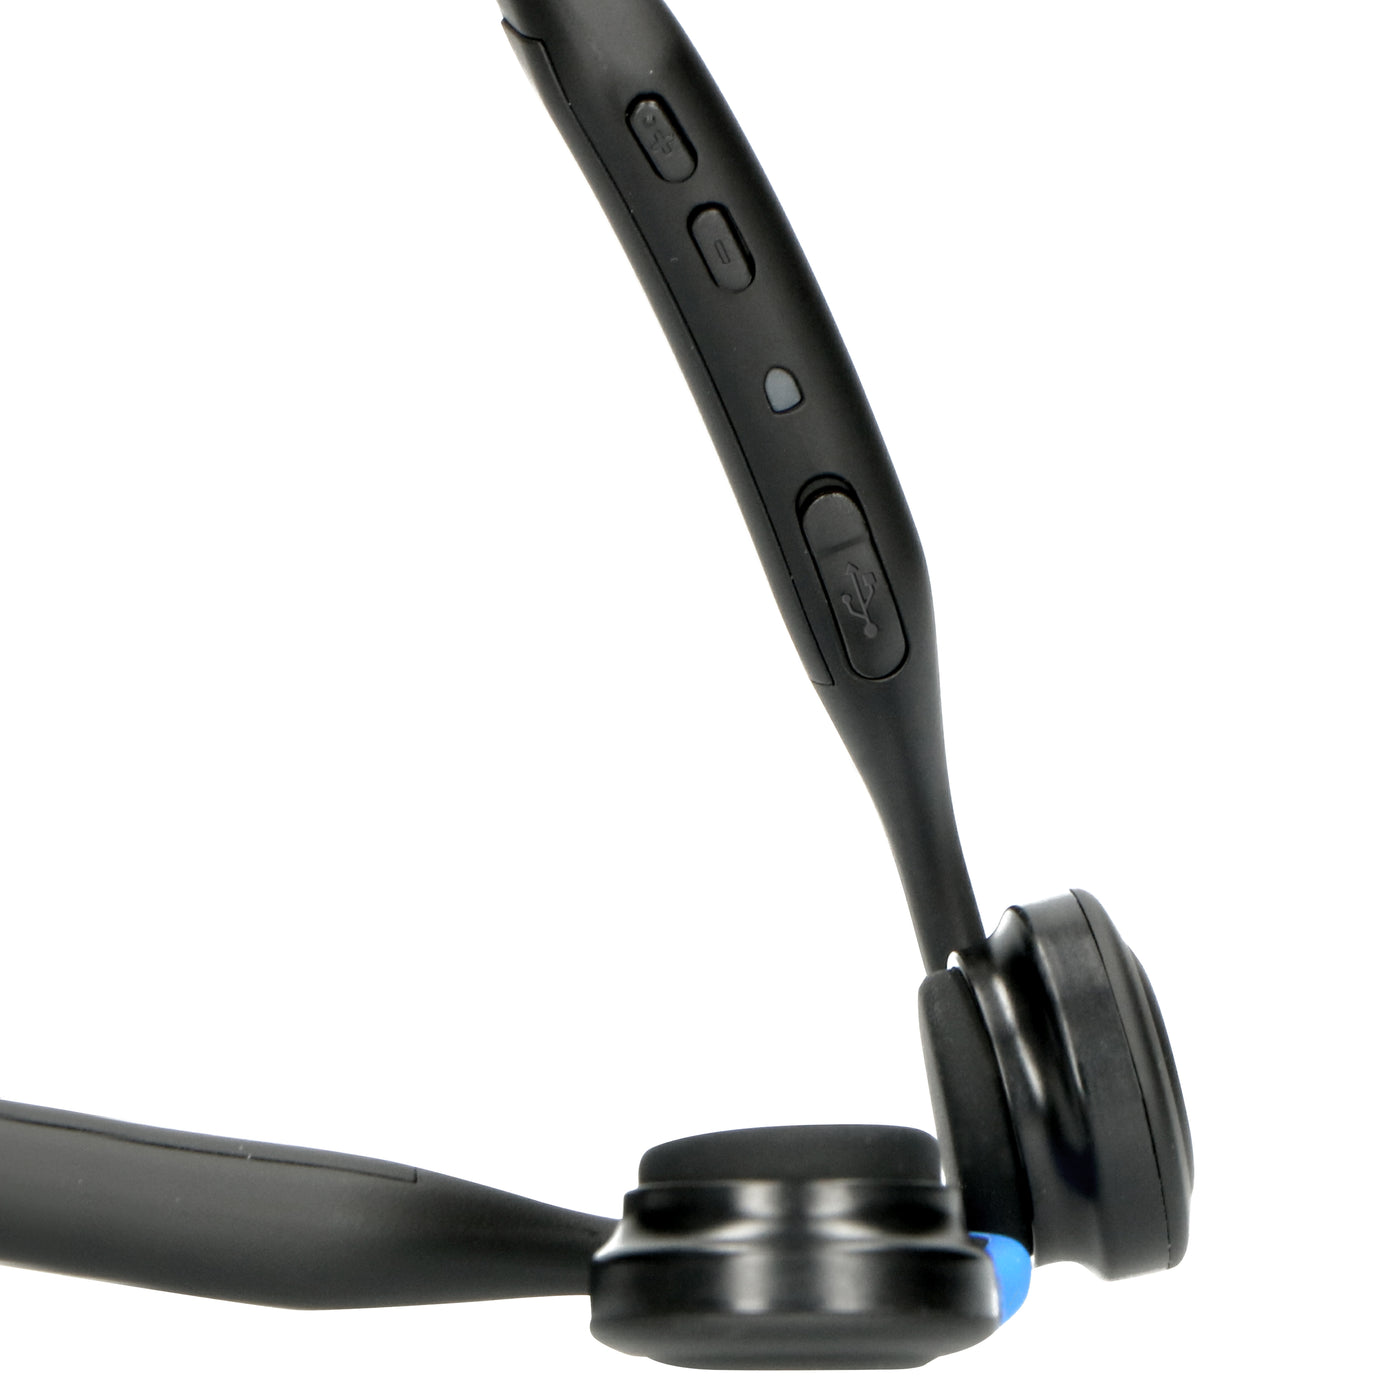 Lenco BCH-1000 - Bone Conduction Bluetooth® headphone, blue